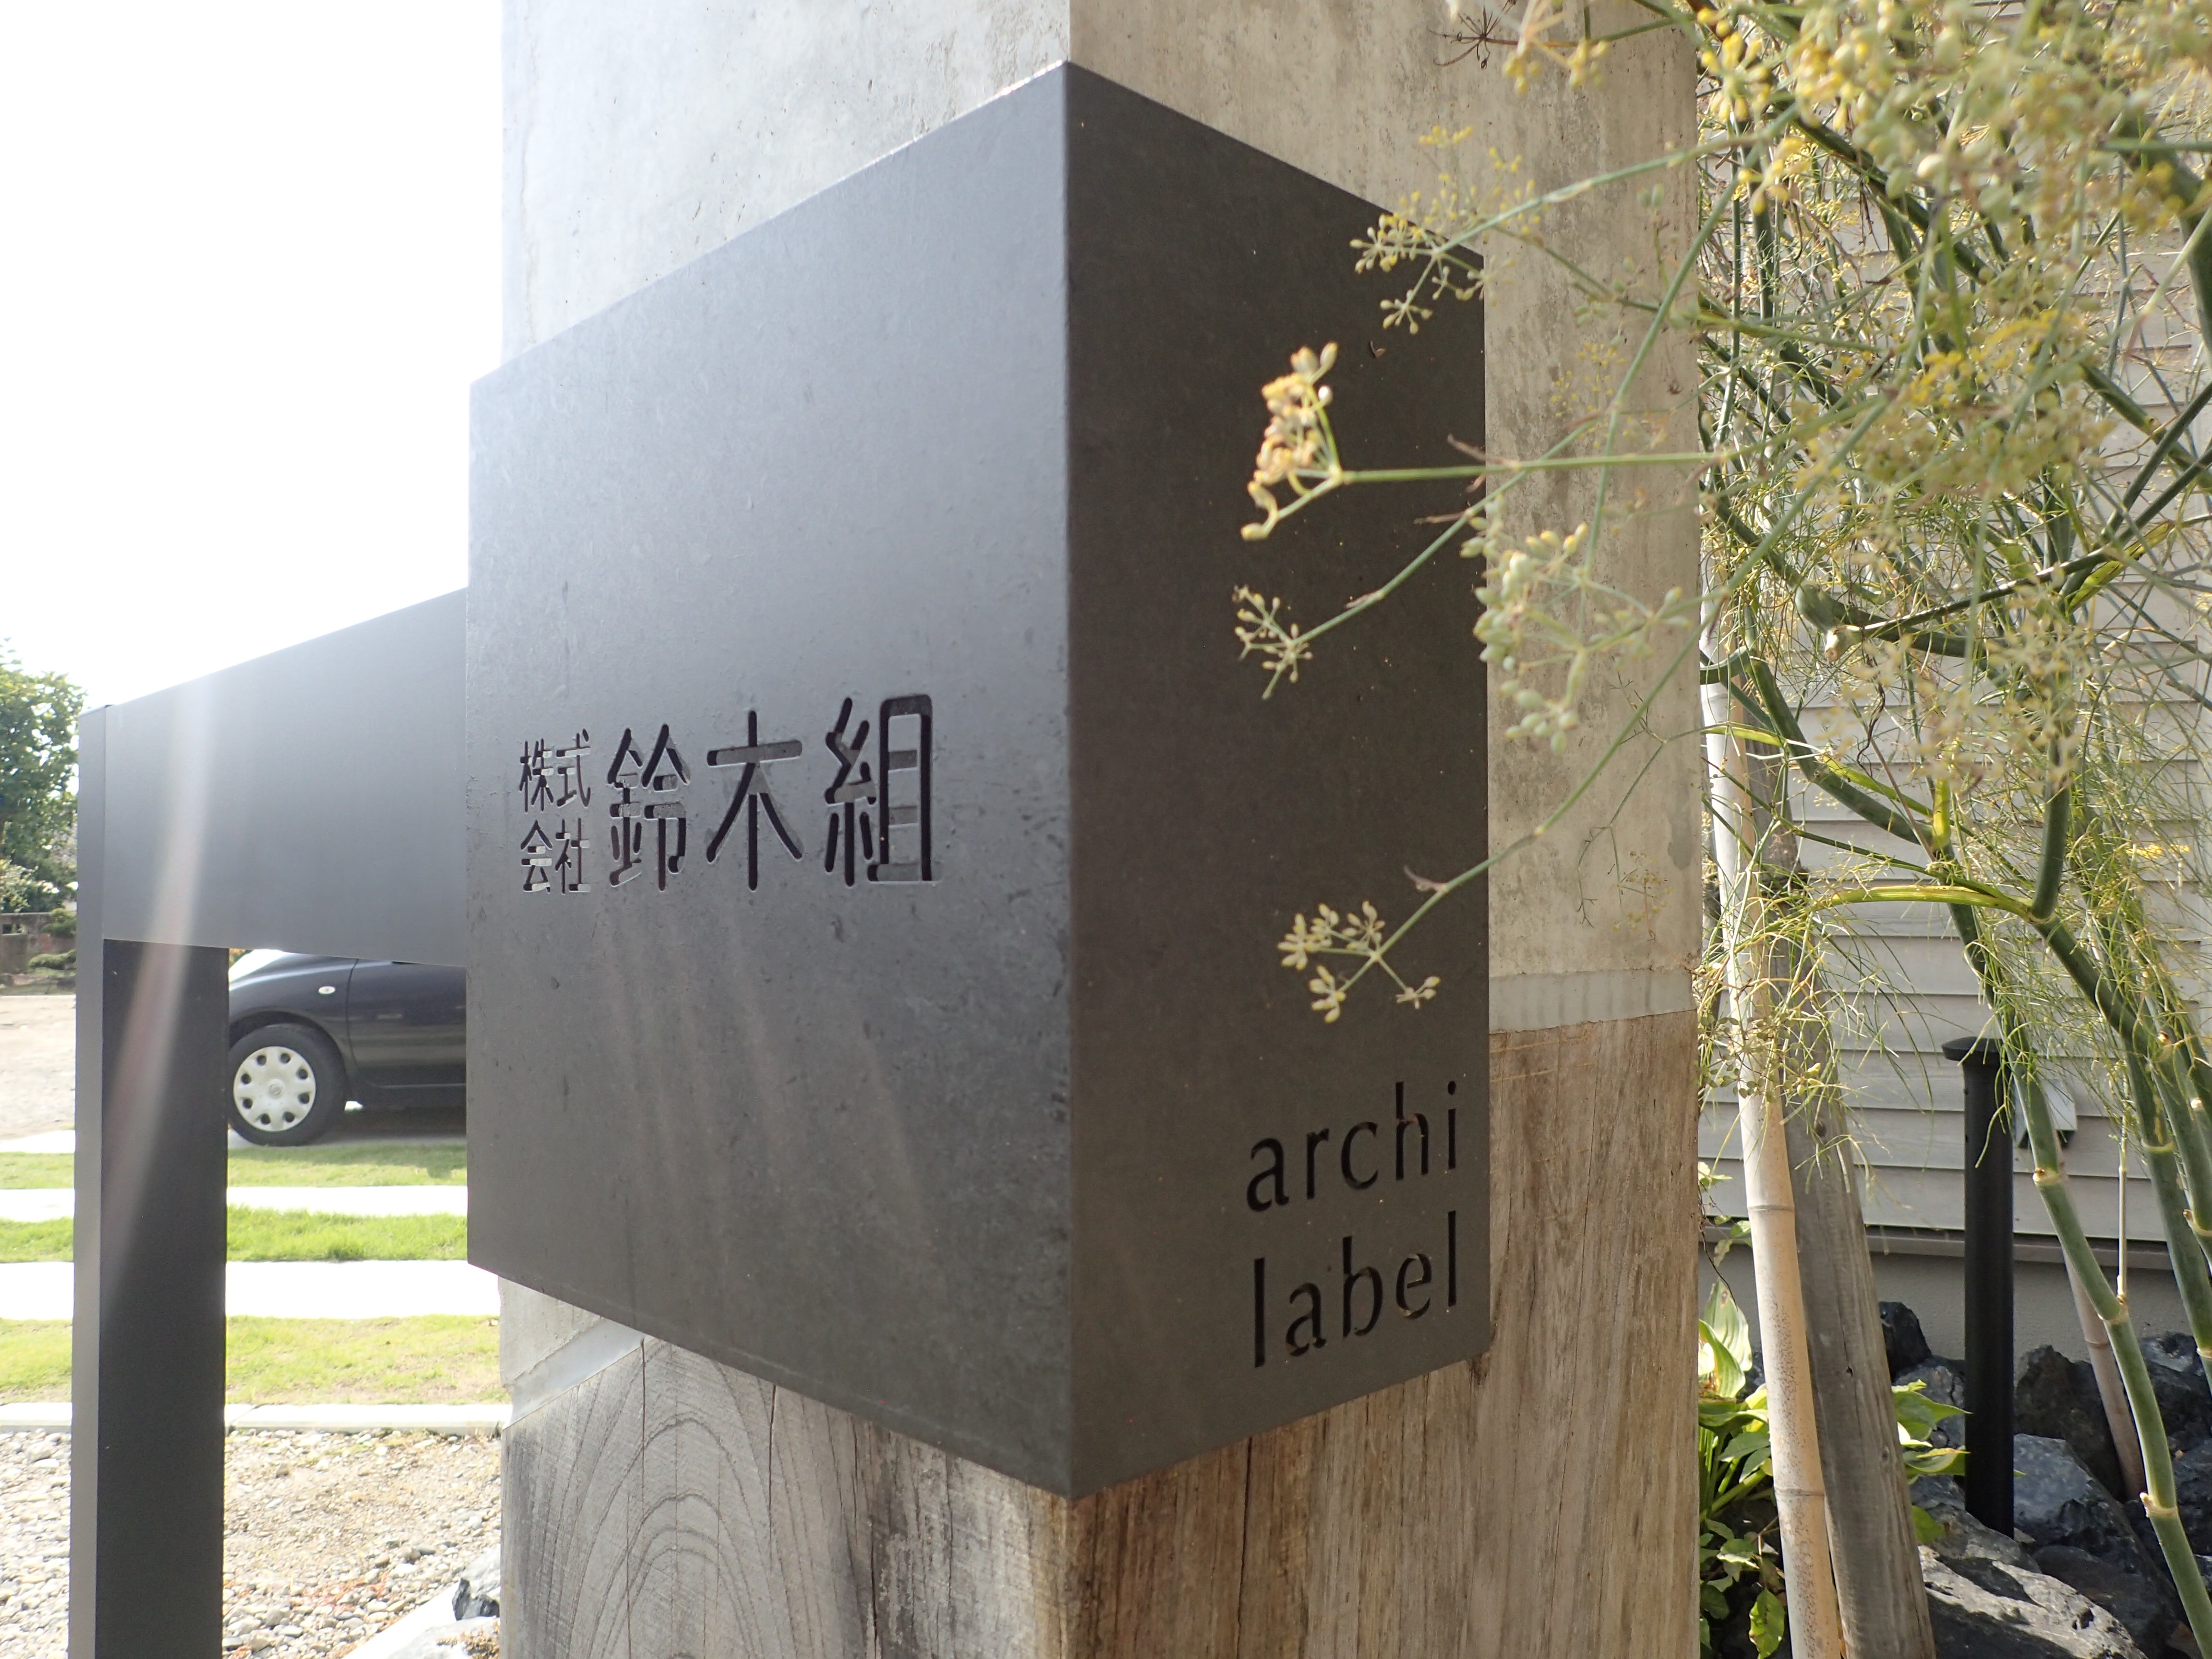 「ARCHI LABEL」は、経済産業者特許庁より商標登録として正式に登録されております。